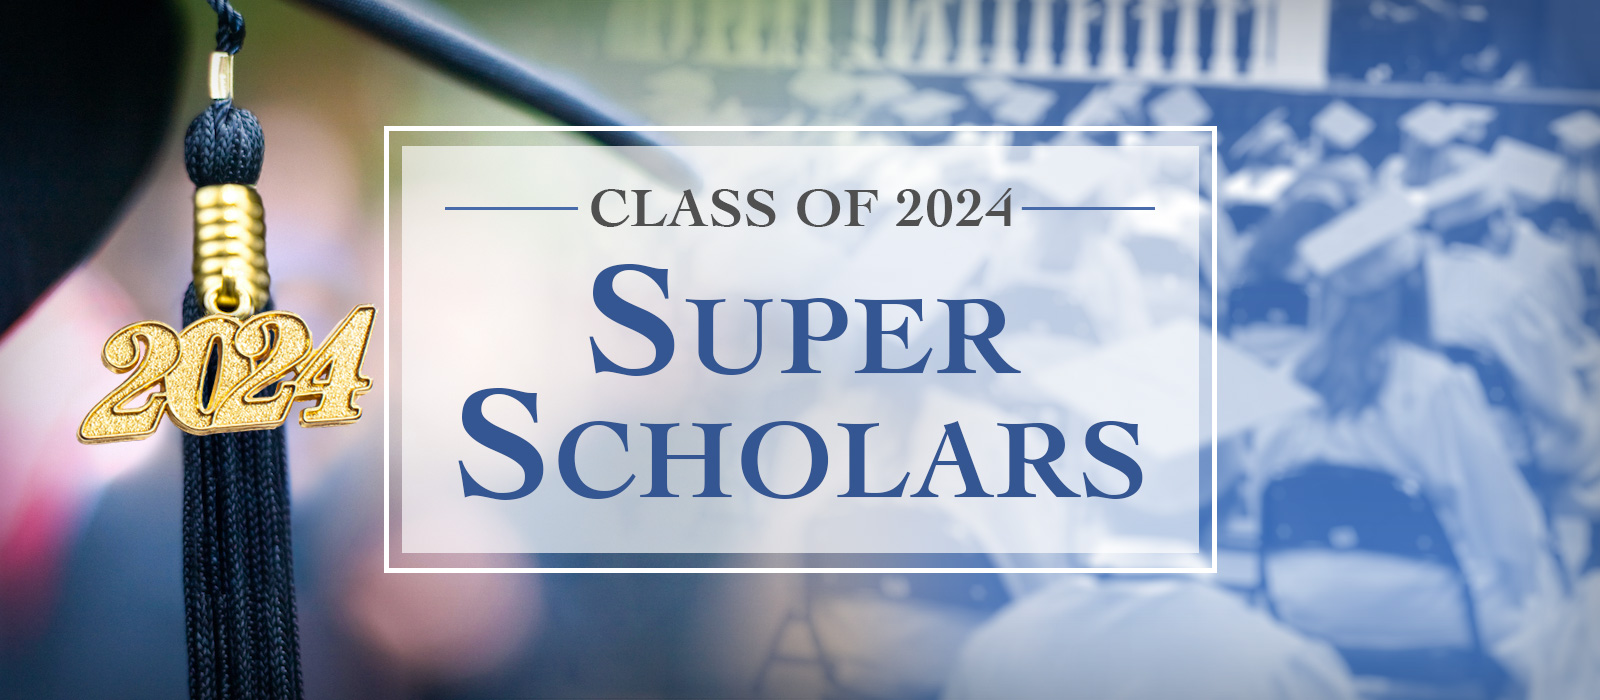 Super Scholars 2024